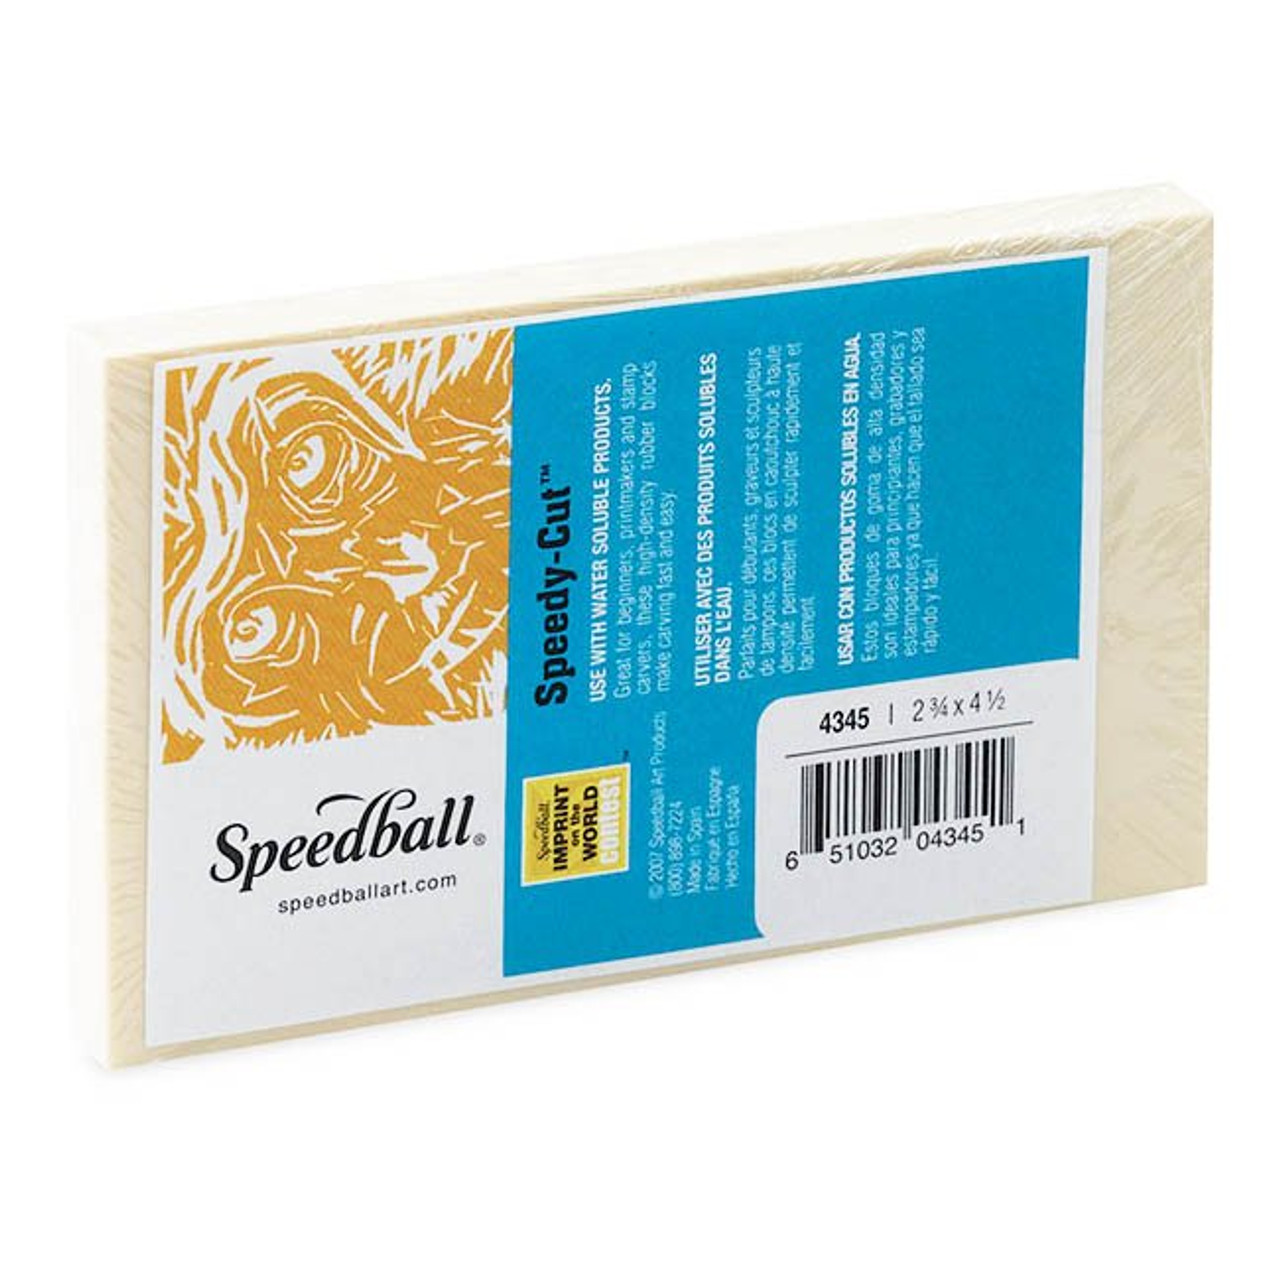 Speedball® Speedy Carve Kit